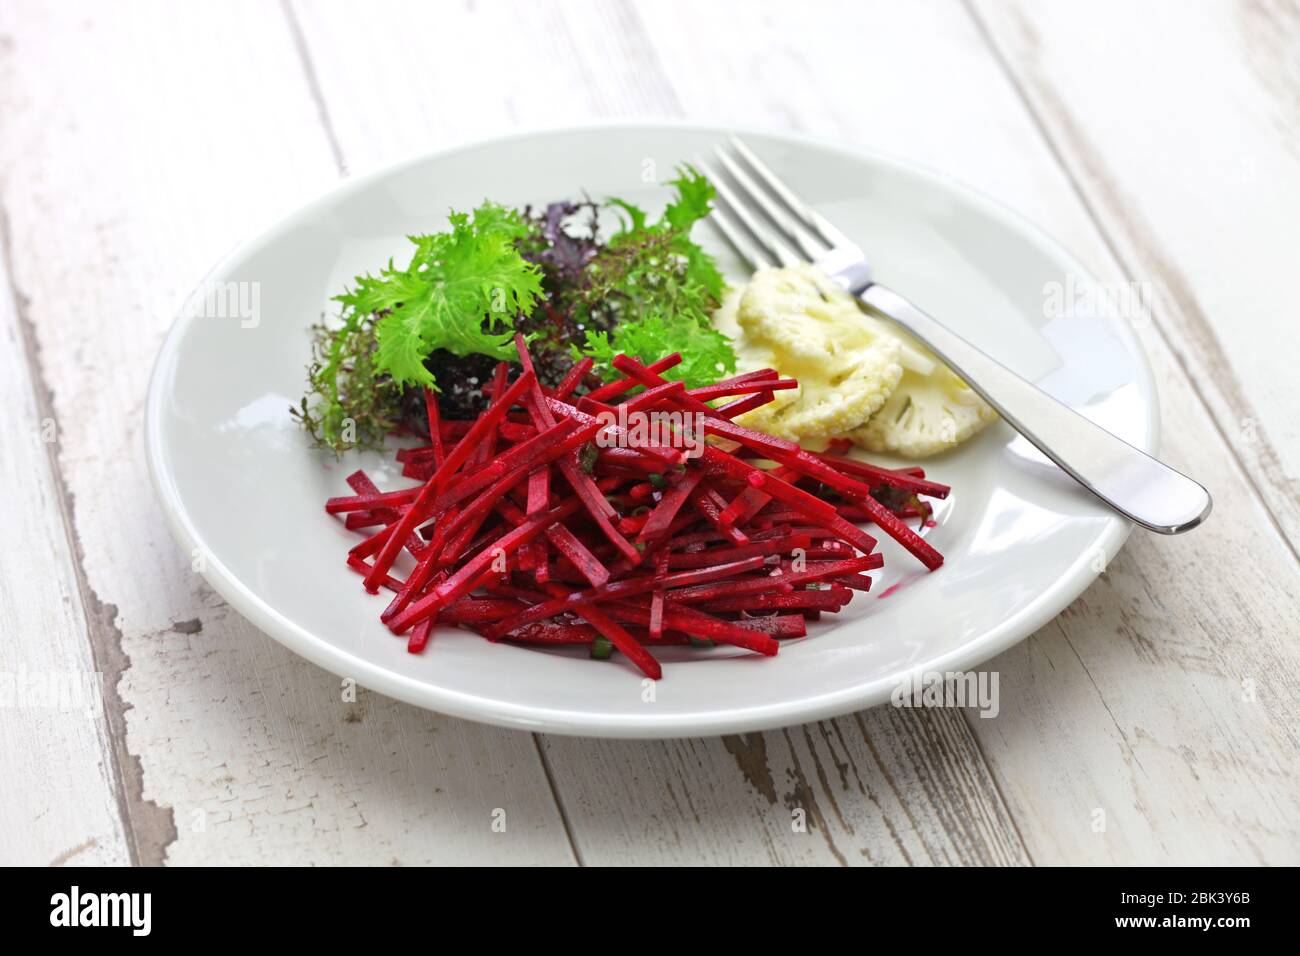 julienne beetroot salad, healthy vegetarian cuisine Stock Photo